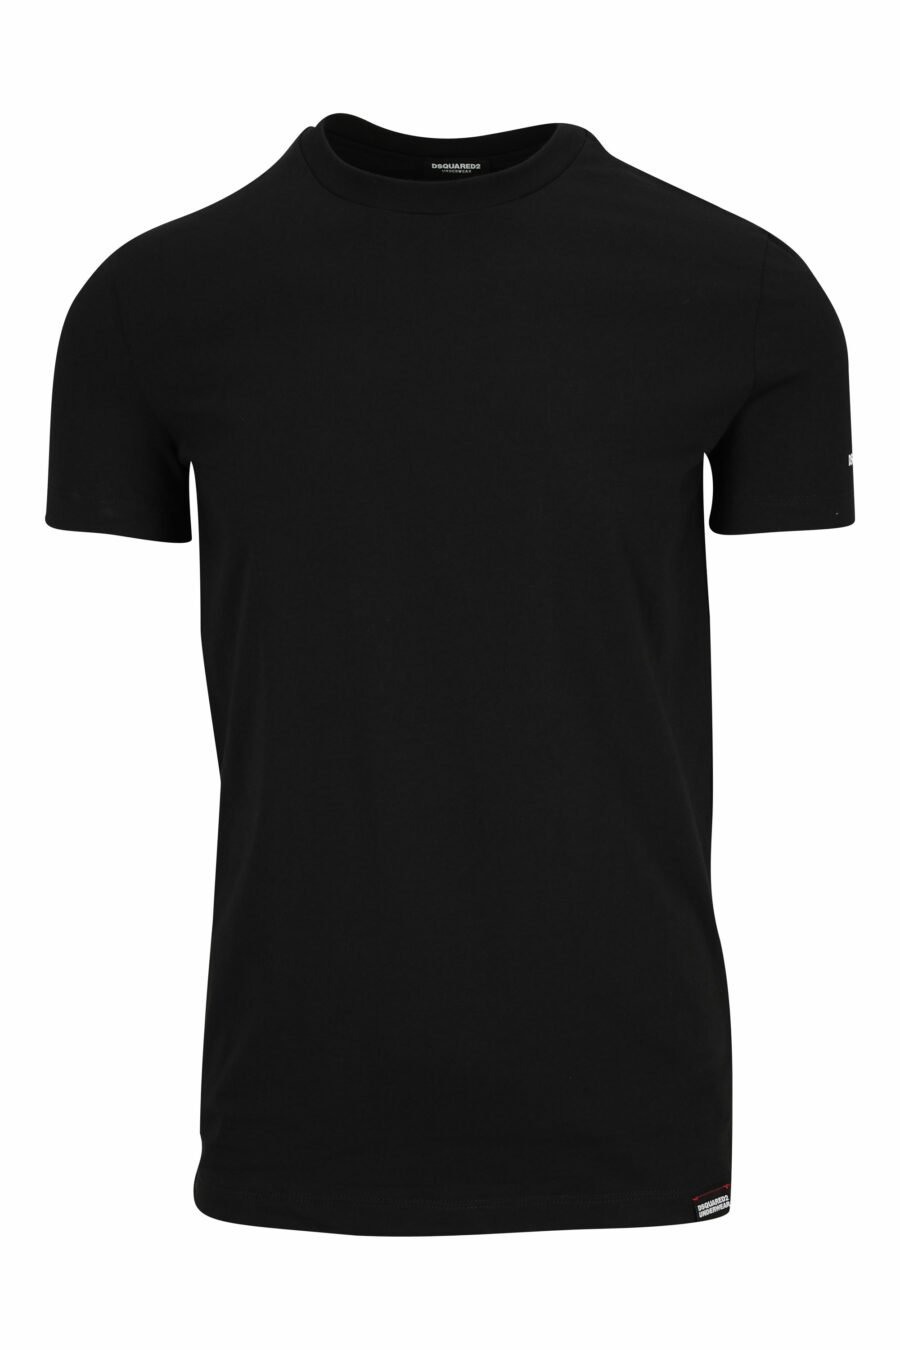 Camiseta negra con minilogo "underwear" blanco - 8032674811509